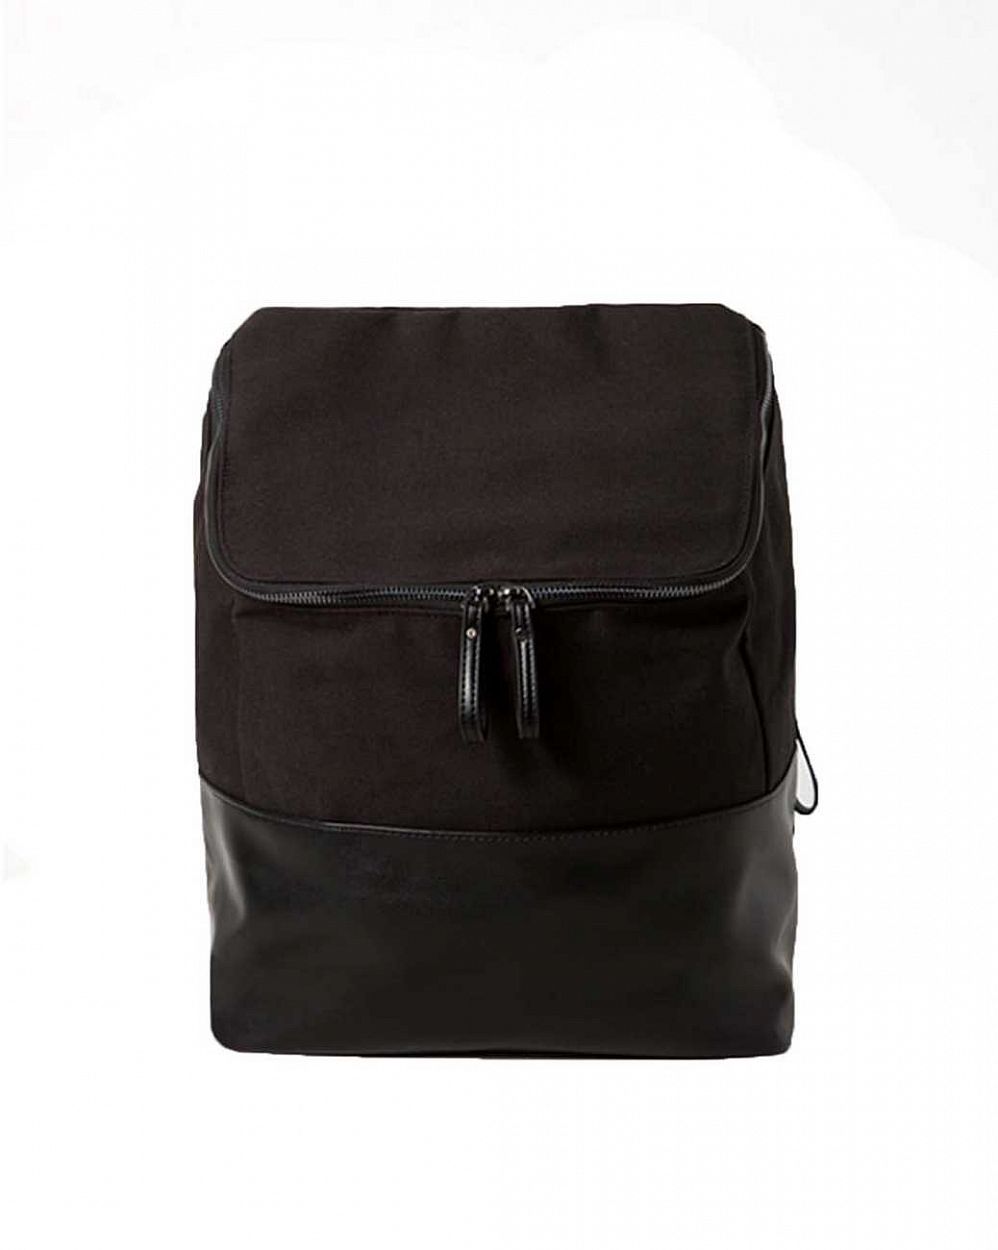 Рюкзак тканевый с кожаным дном YellowStone Hippo Bag Black отзывы